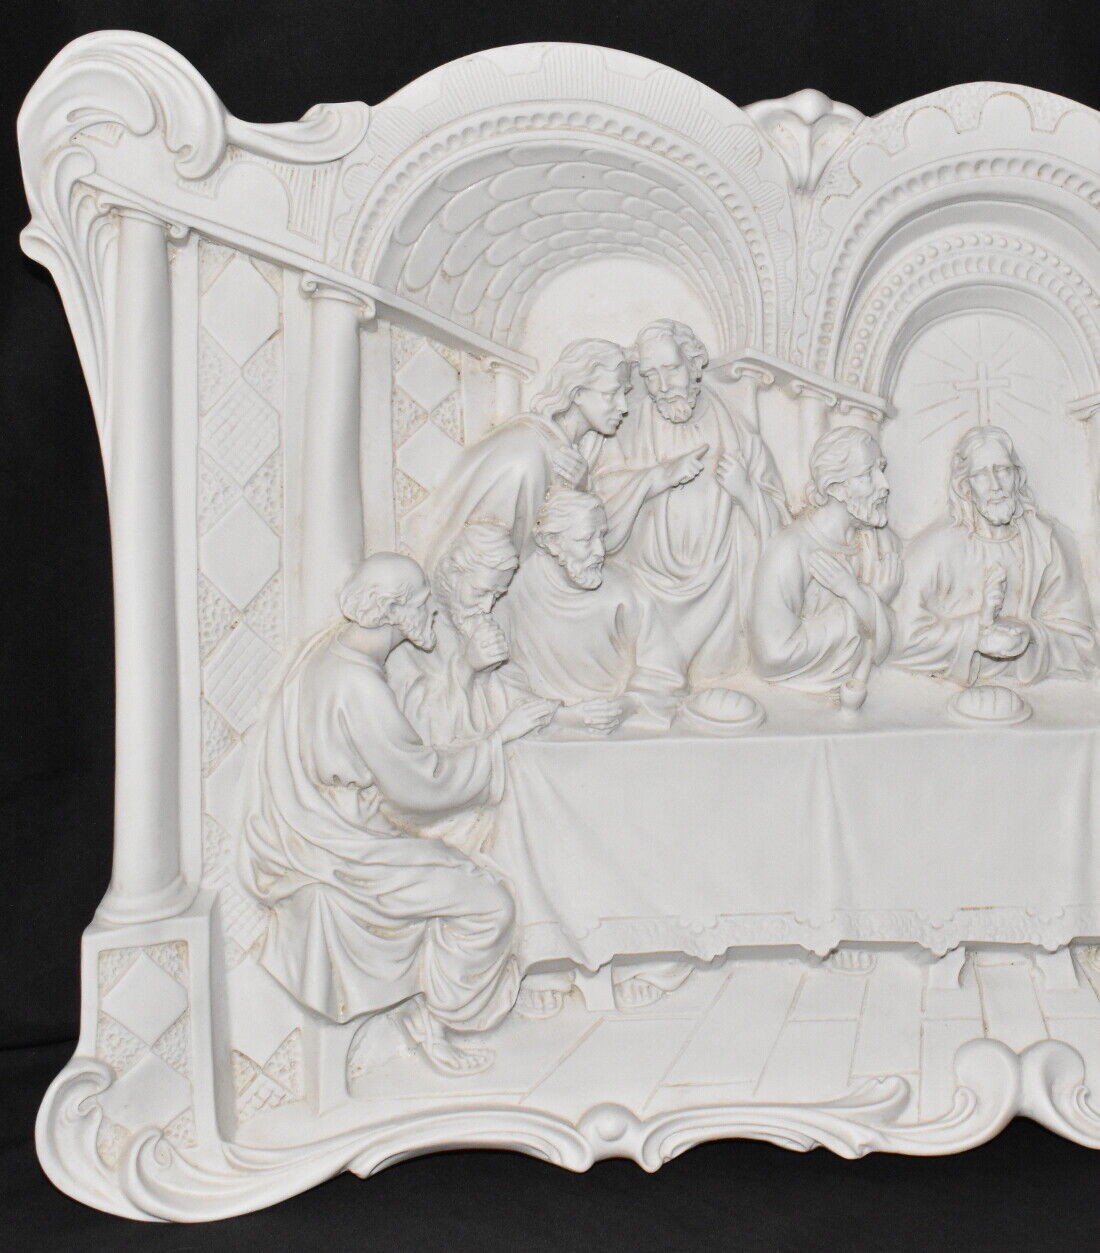 Vittoria Collection Italian Handcrafted Last Supper Art Sculpture in Relief 28"